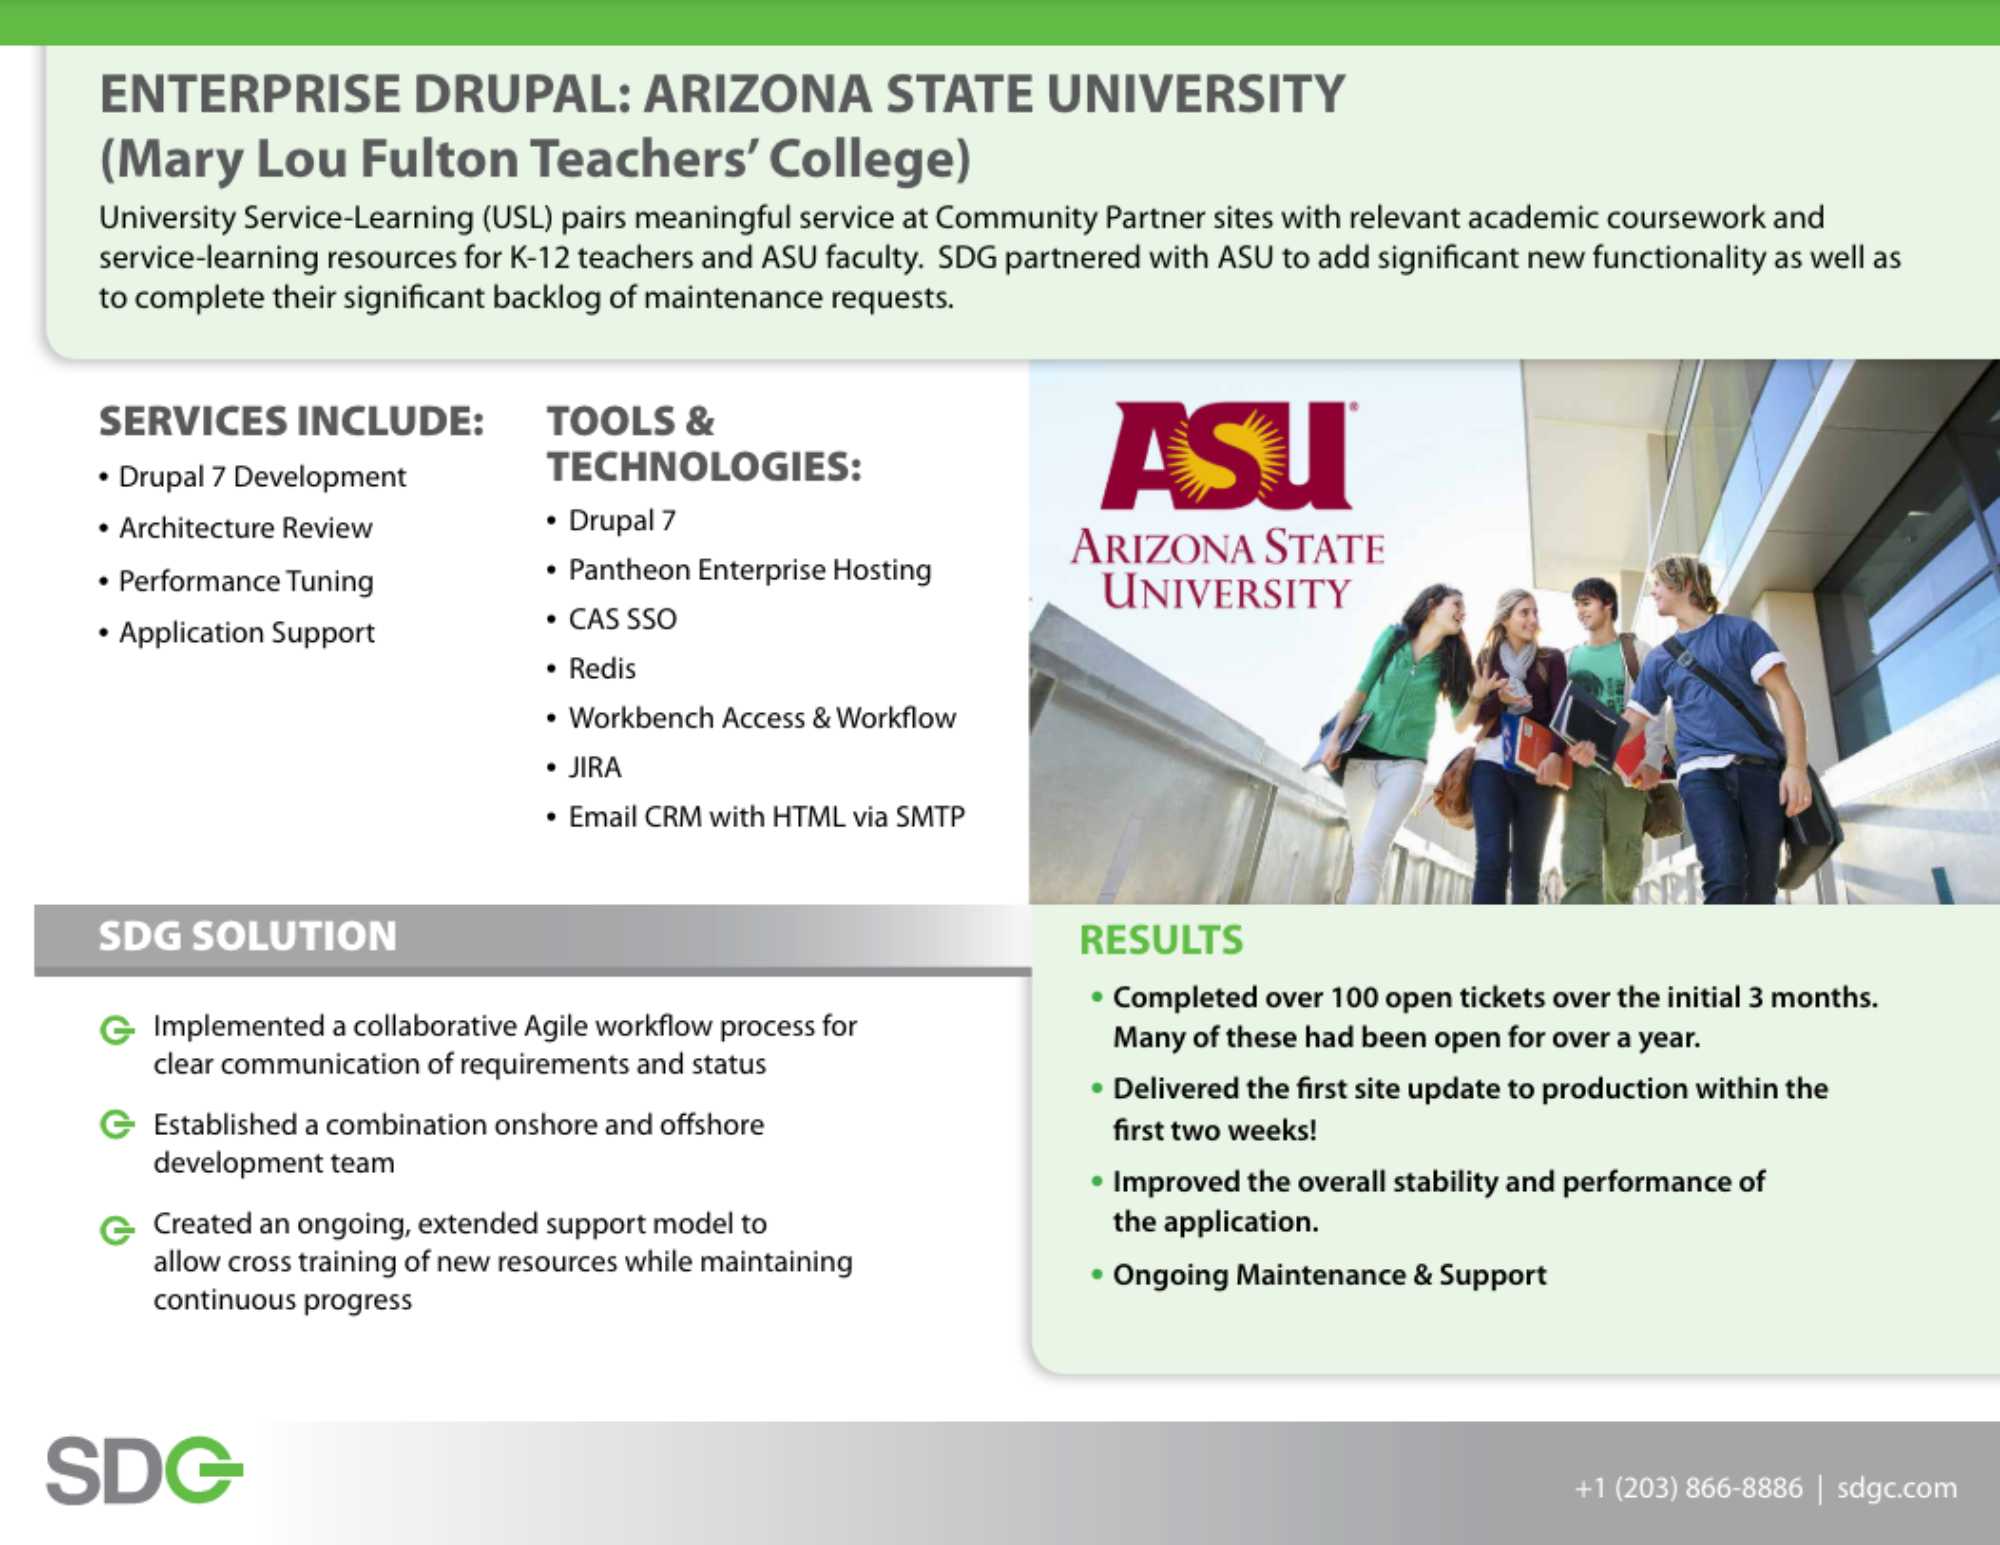 Enterprise Drupal Arizona State University Case Study Image